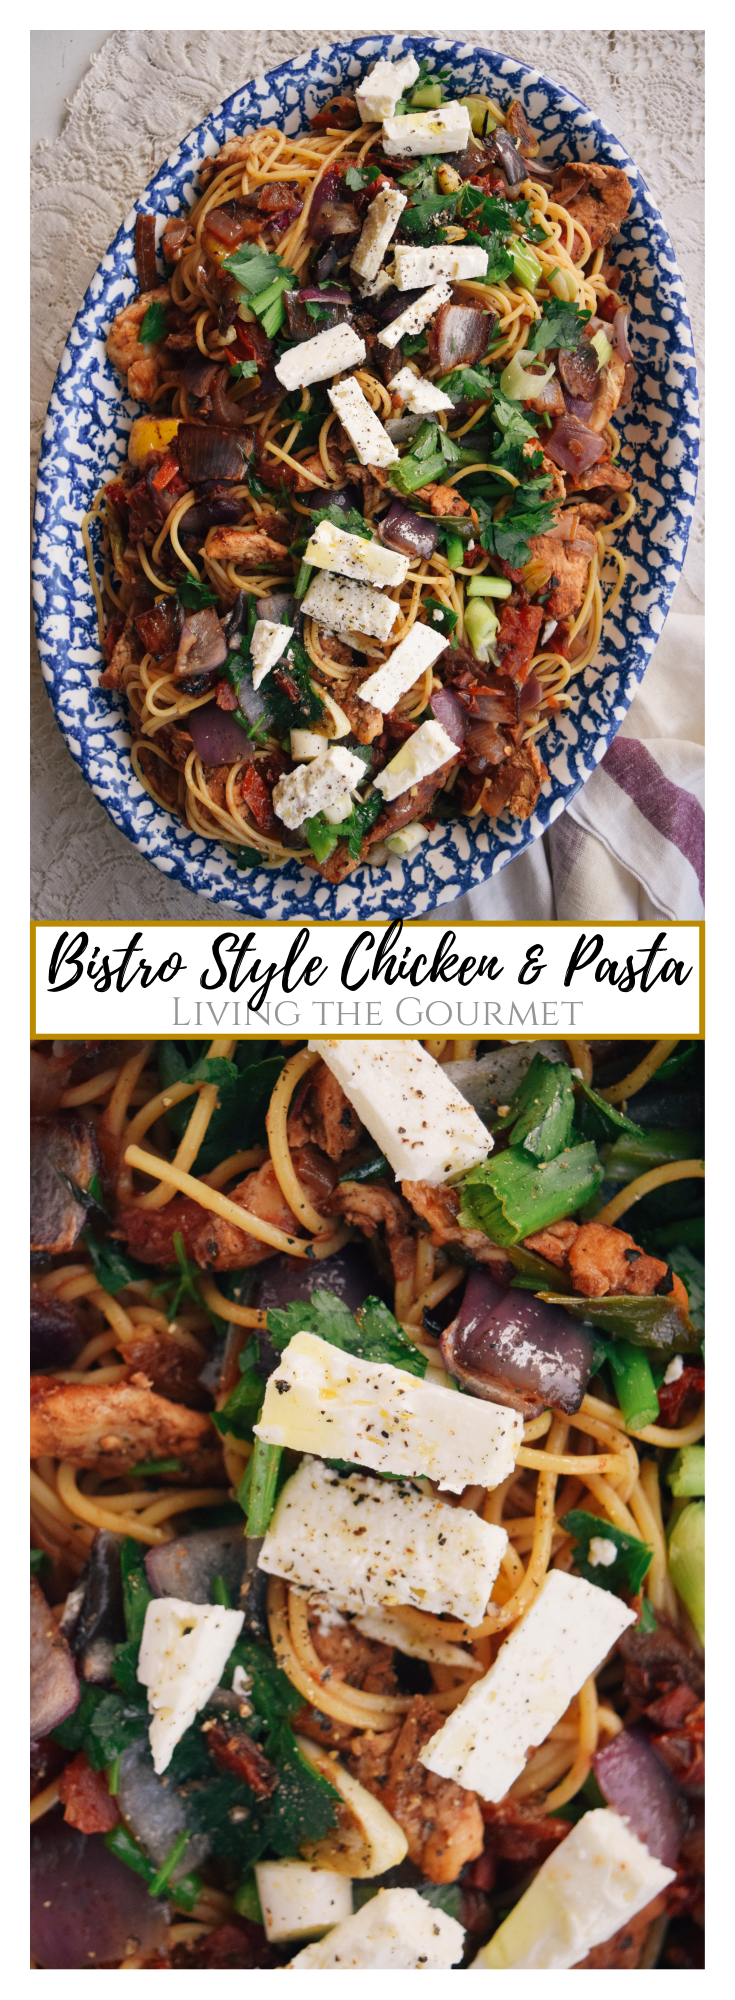 Bistro Style Chicken & Pasta - Living The Gourmet